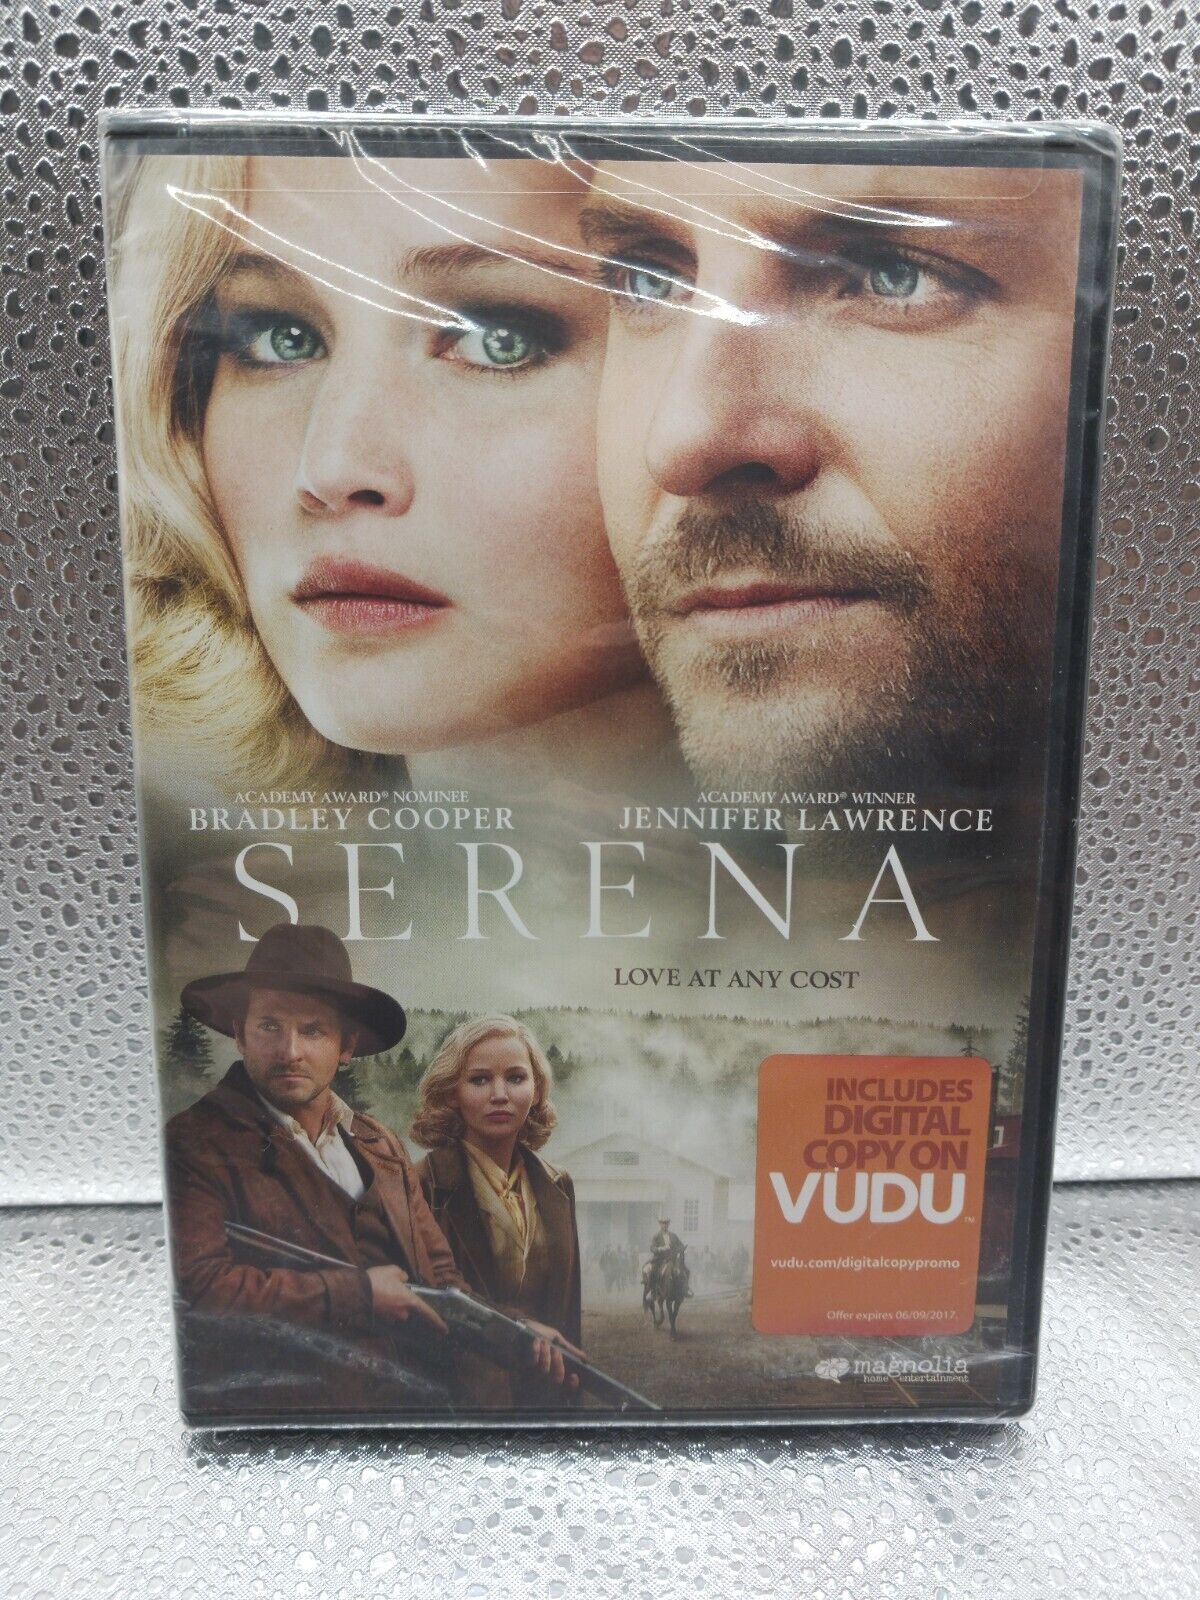 Serena (DVD) w/ Bradley Cooper & Jennifer Lawrence